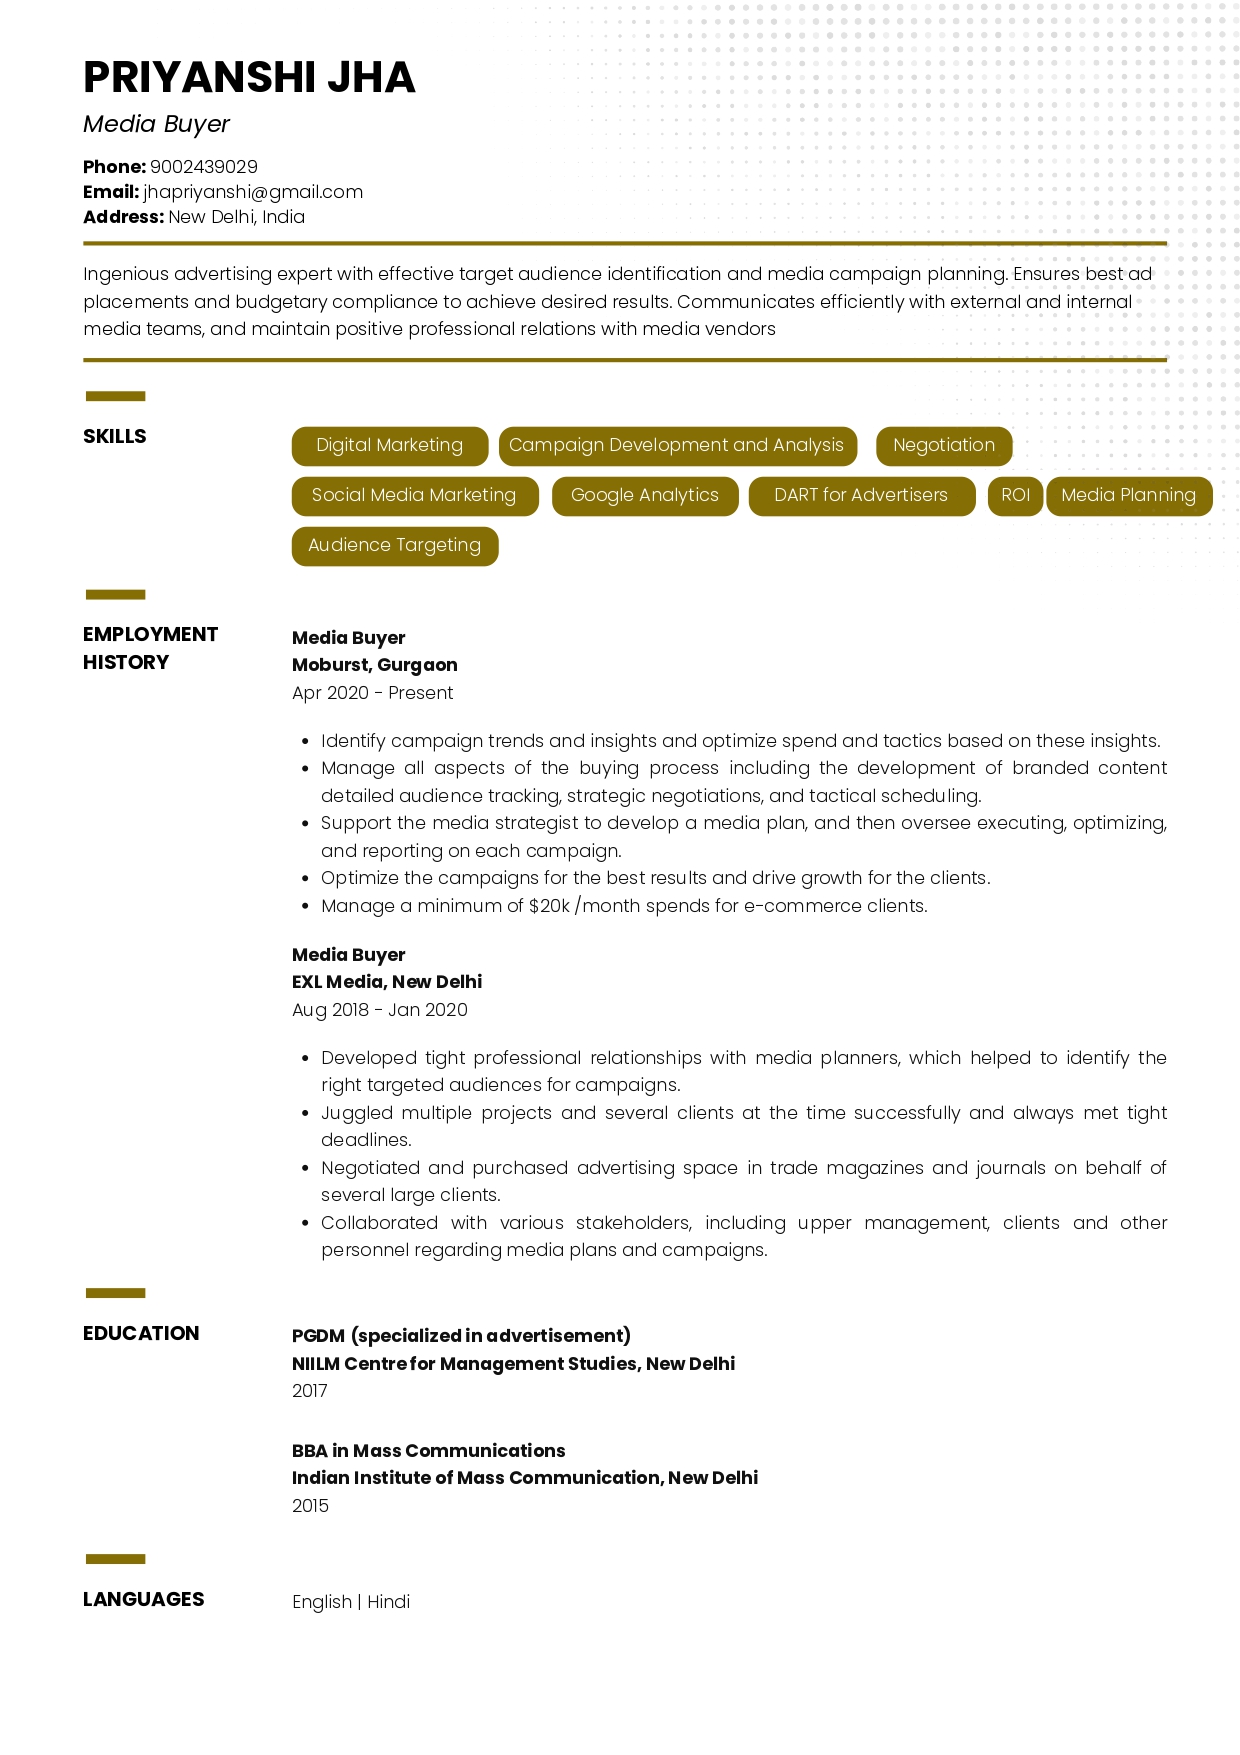 Sample Resume of Media Buyer | Free Resume Templates & Samples on Resumod.co